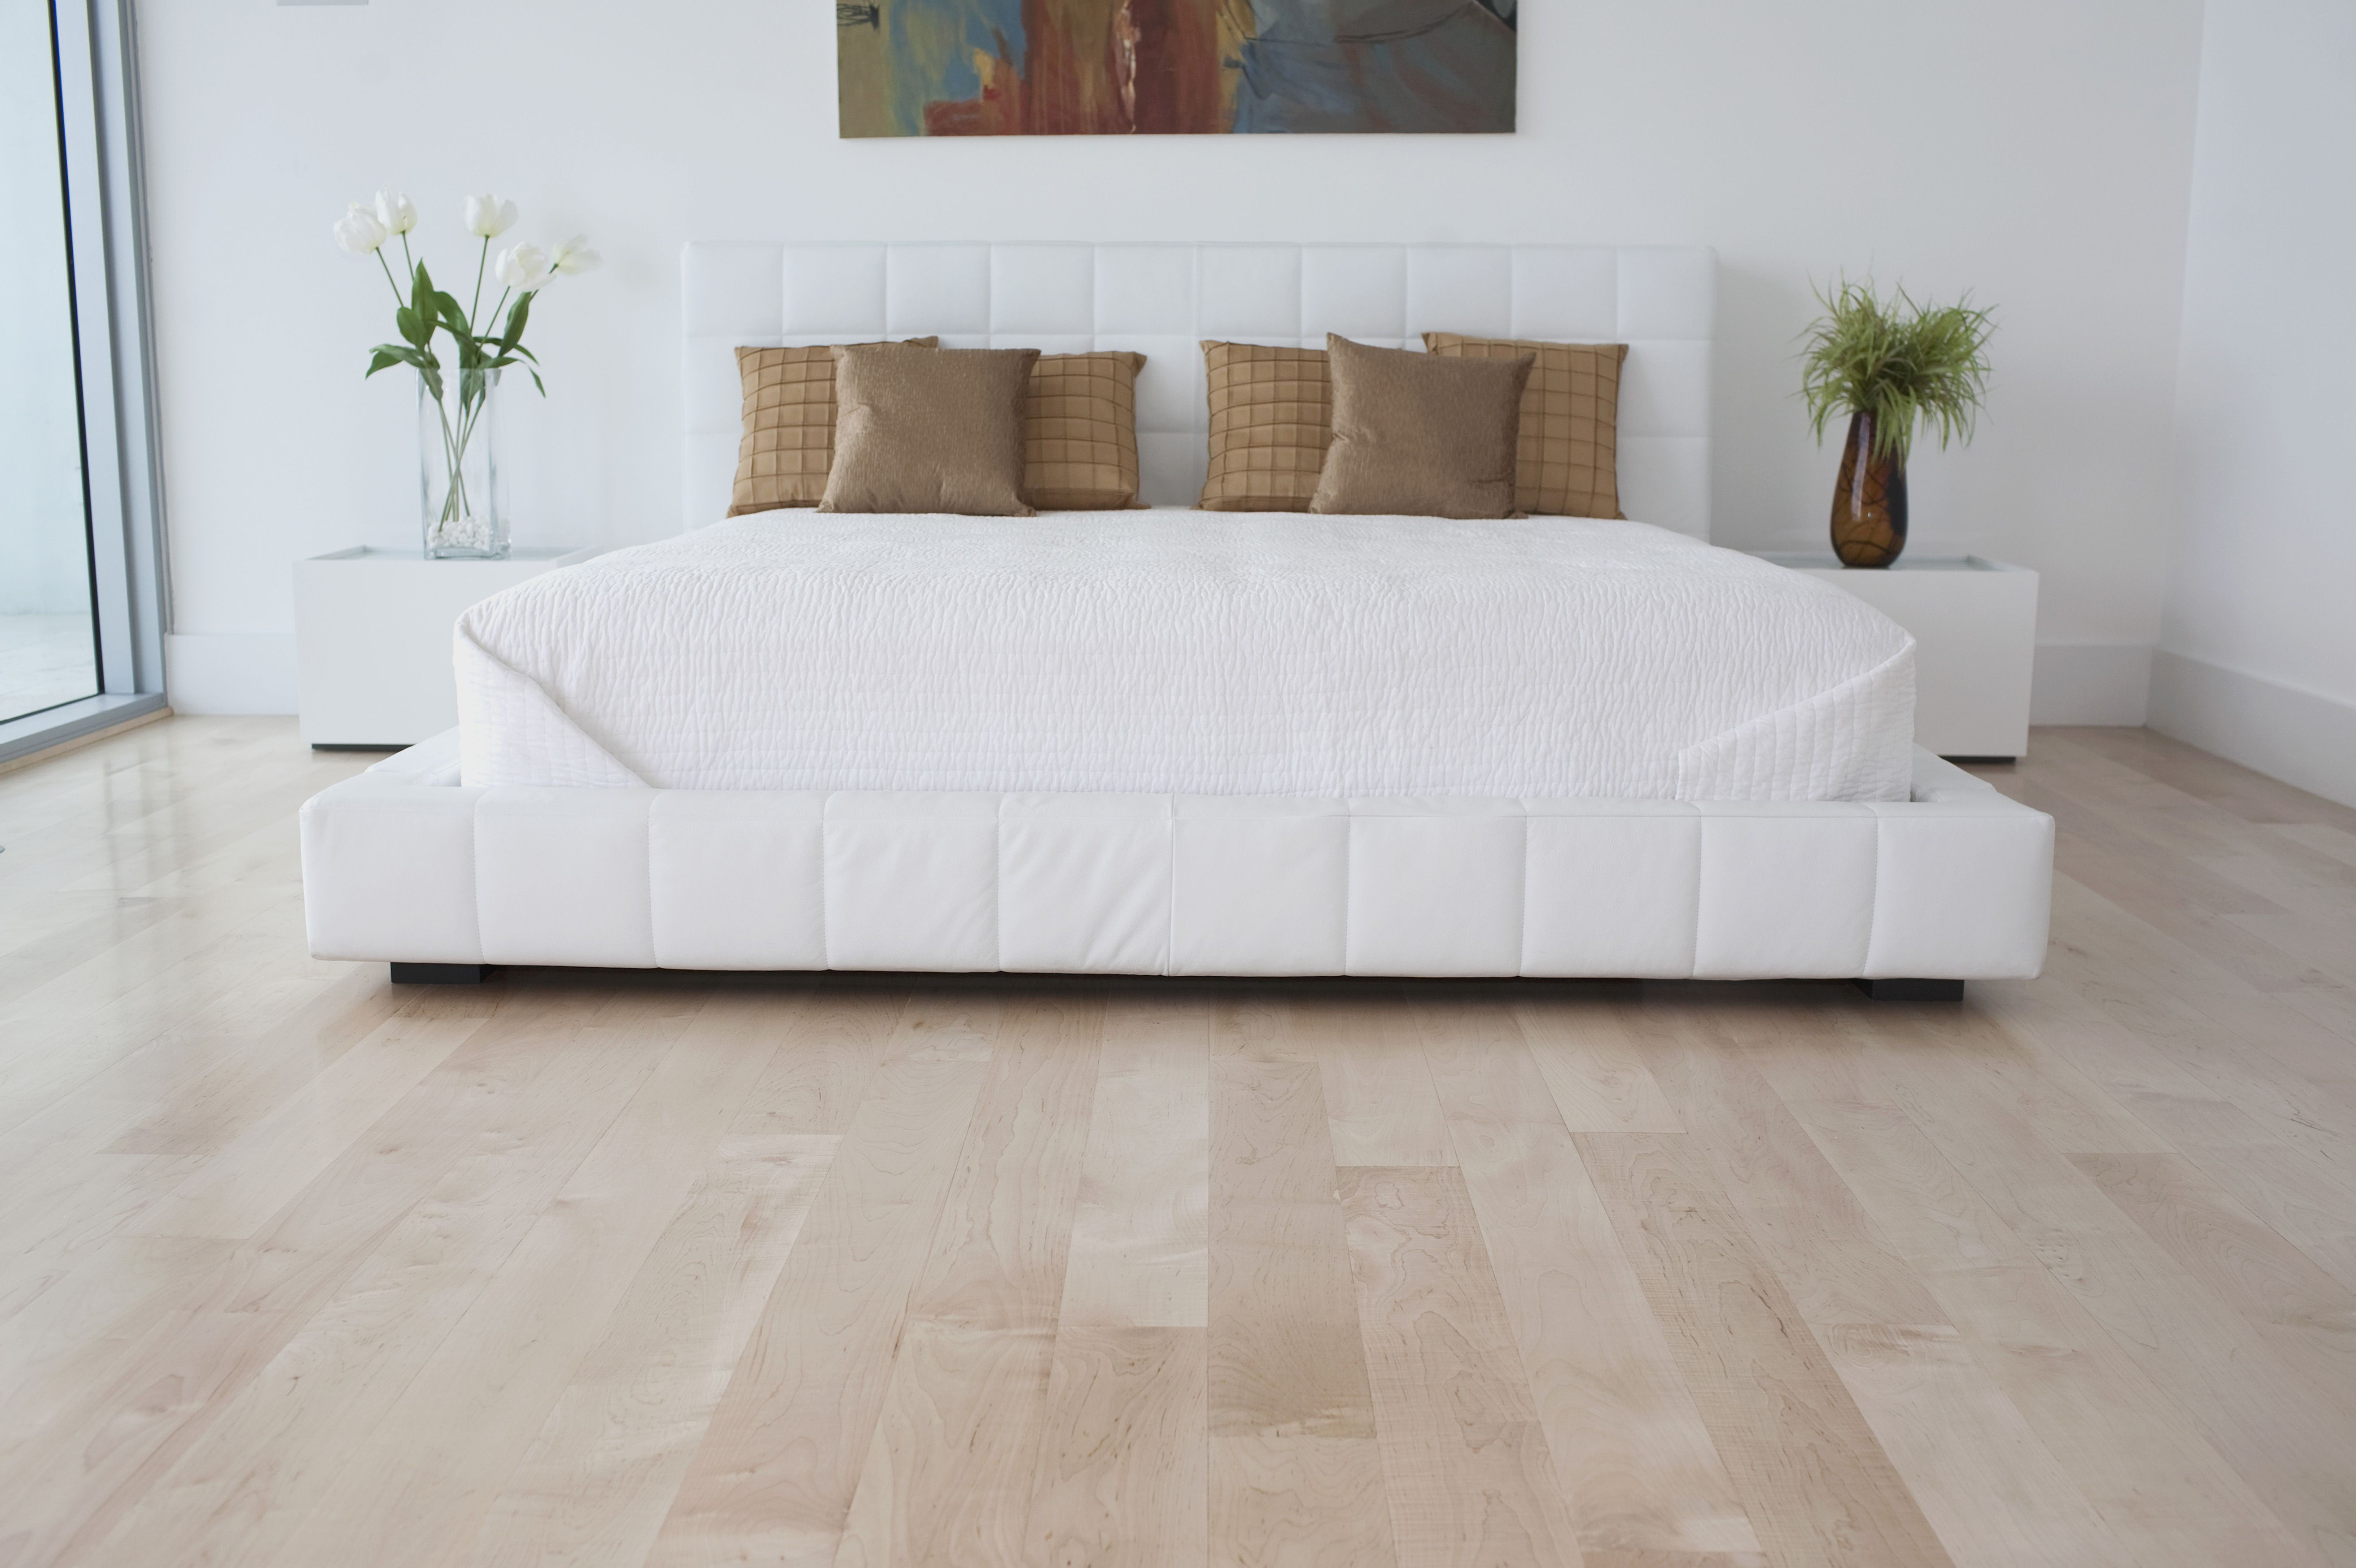 16 Famous Hardwood Flooring Uk Price 2024 free download hardwood flooring uk price of 5 best bedroom flooring materials in interiors of a bedroom 126171674 57be063d3df78cc16e3cc6cf